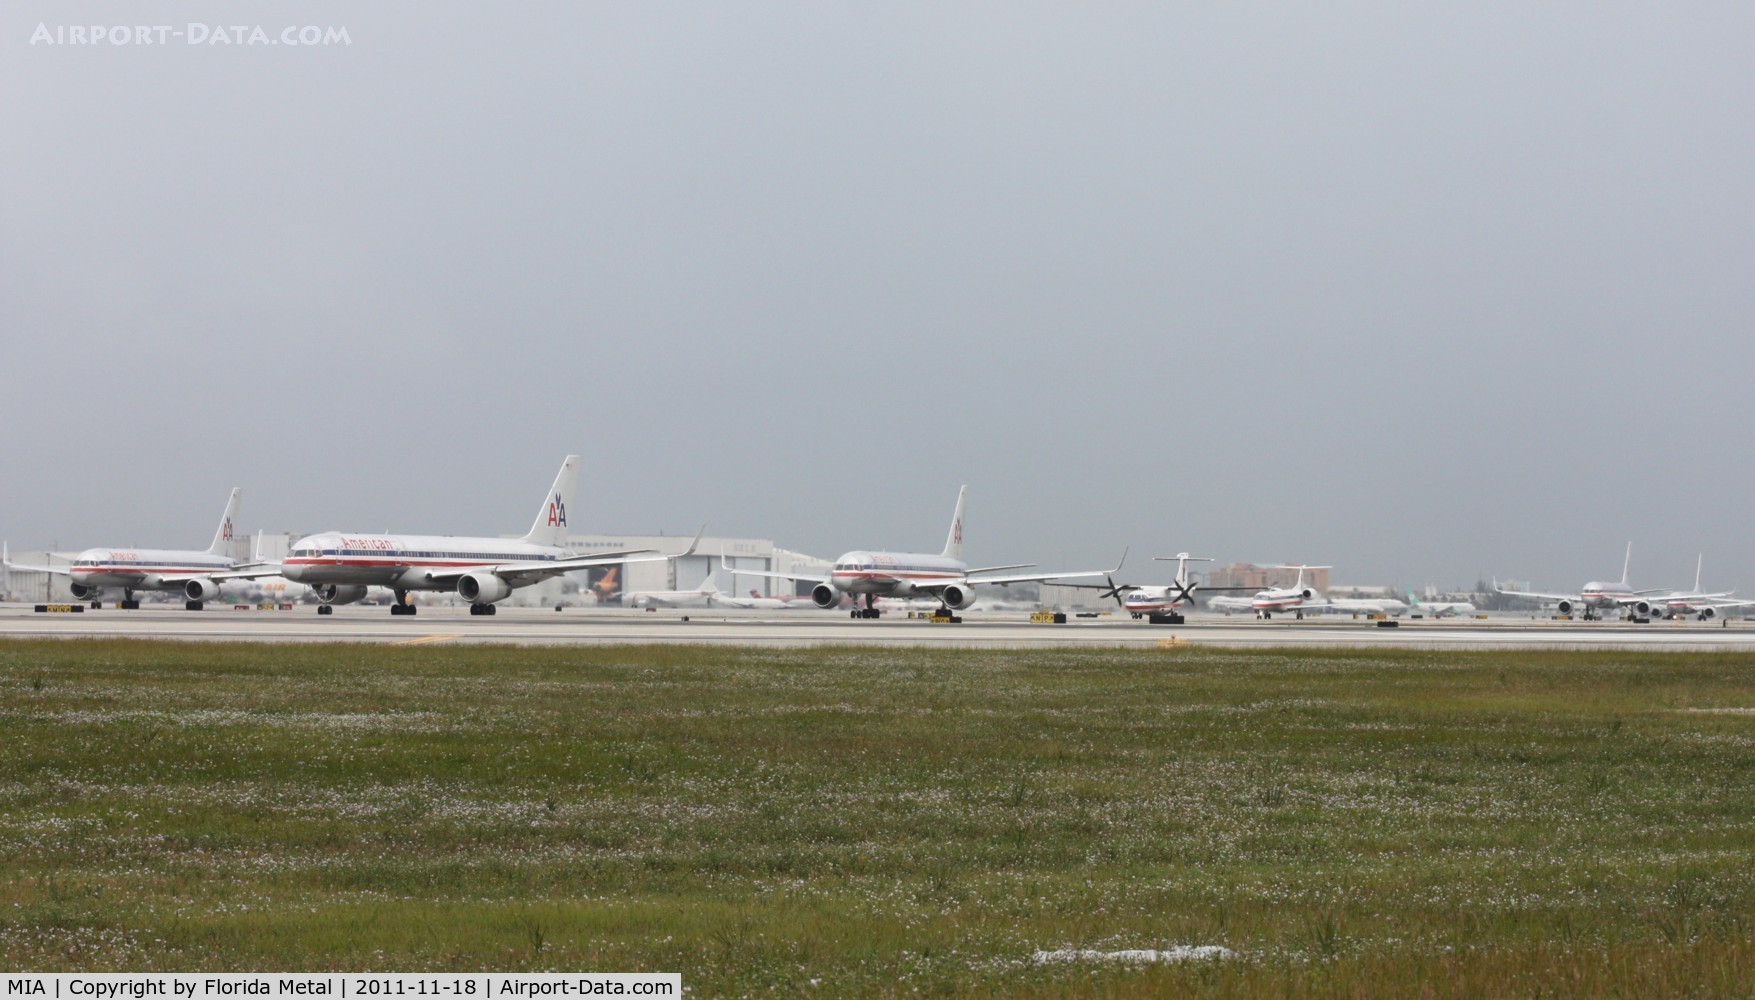 Miami International Airport (MIA) - Miami departure queue for Runway 8R